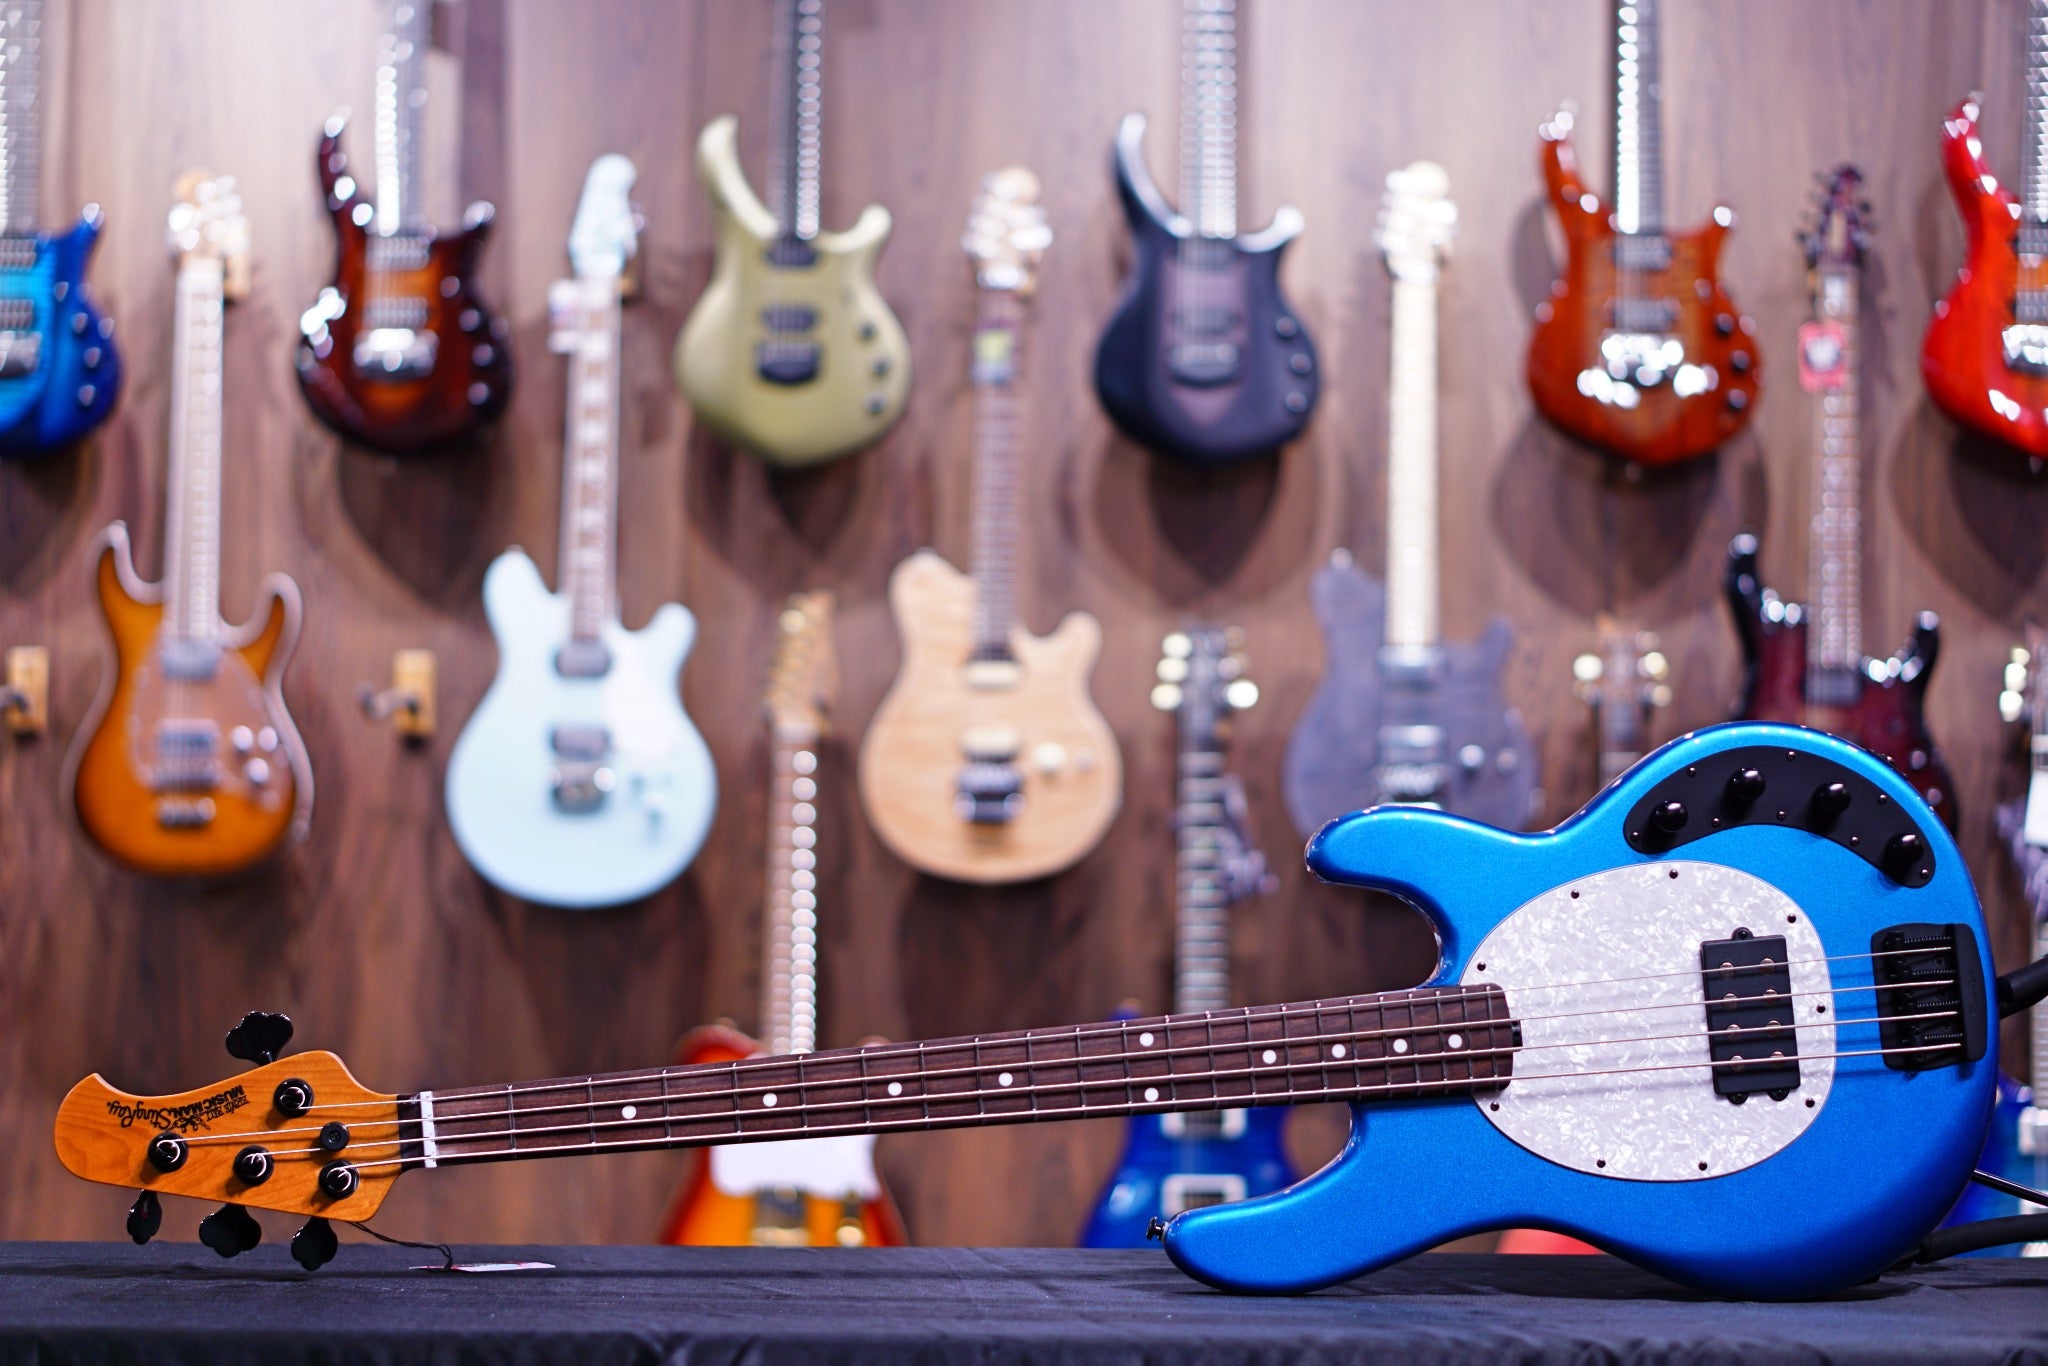 Ernie Ball Music Man StingRay Special Bass Guitar - Speed Blue with Rosewood Fingerboard F96542 - HIENDGUITAR   Musicman bass